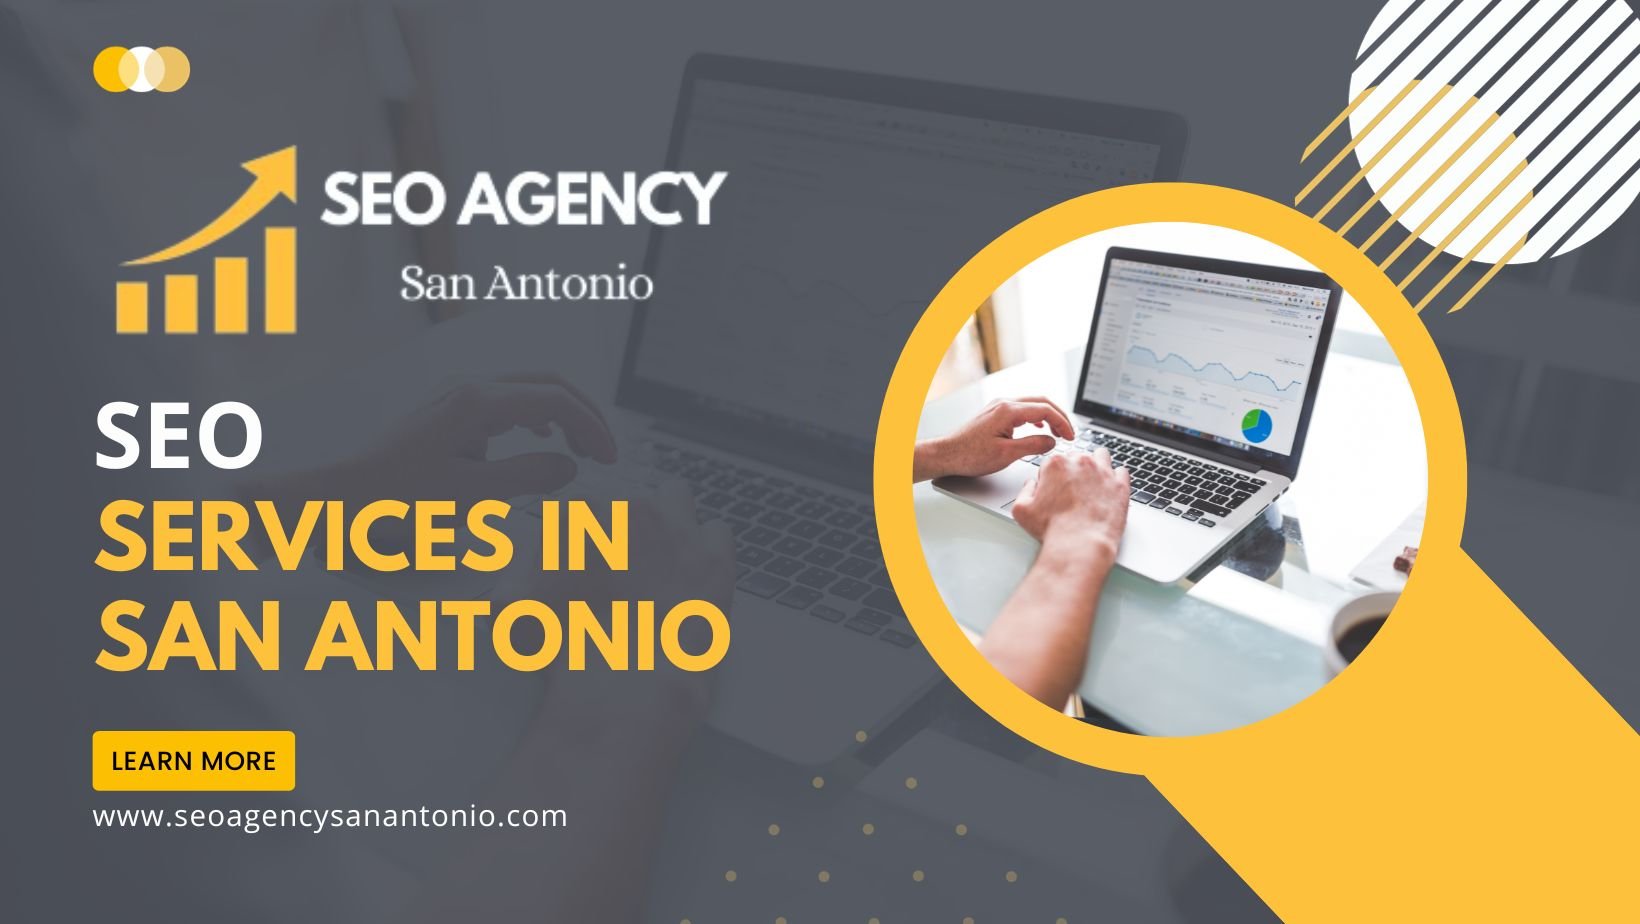 SEO Agency San Antonio cover